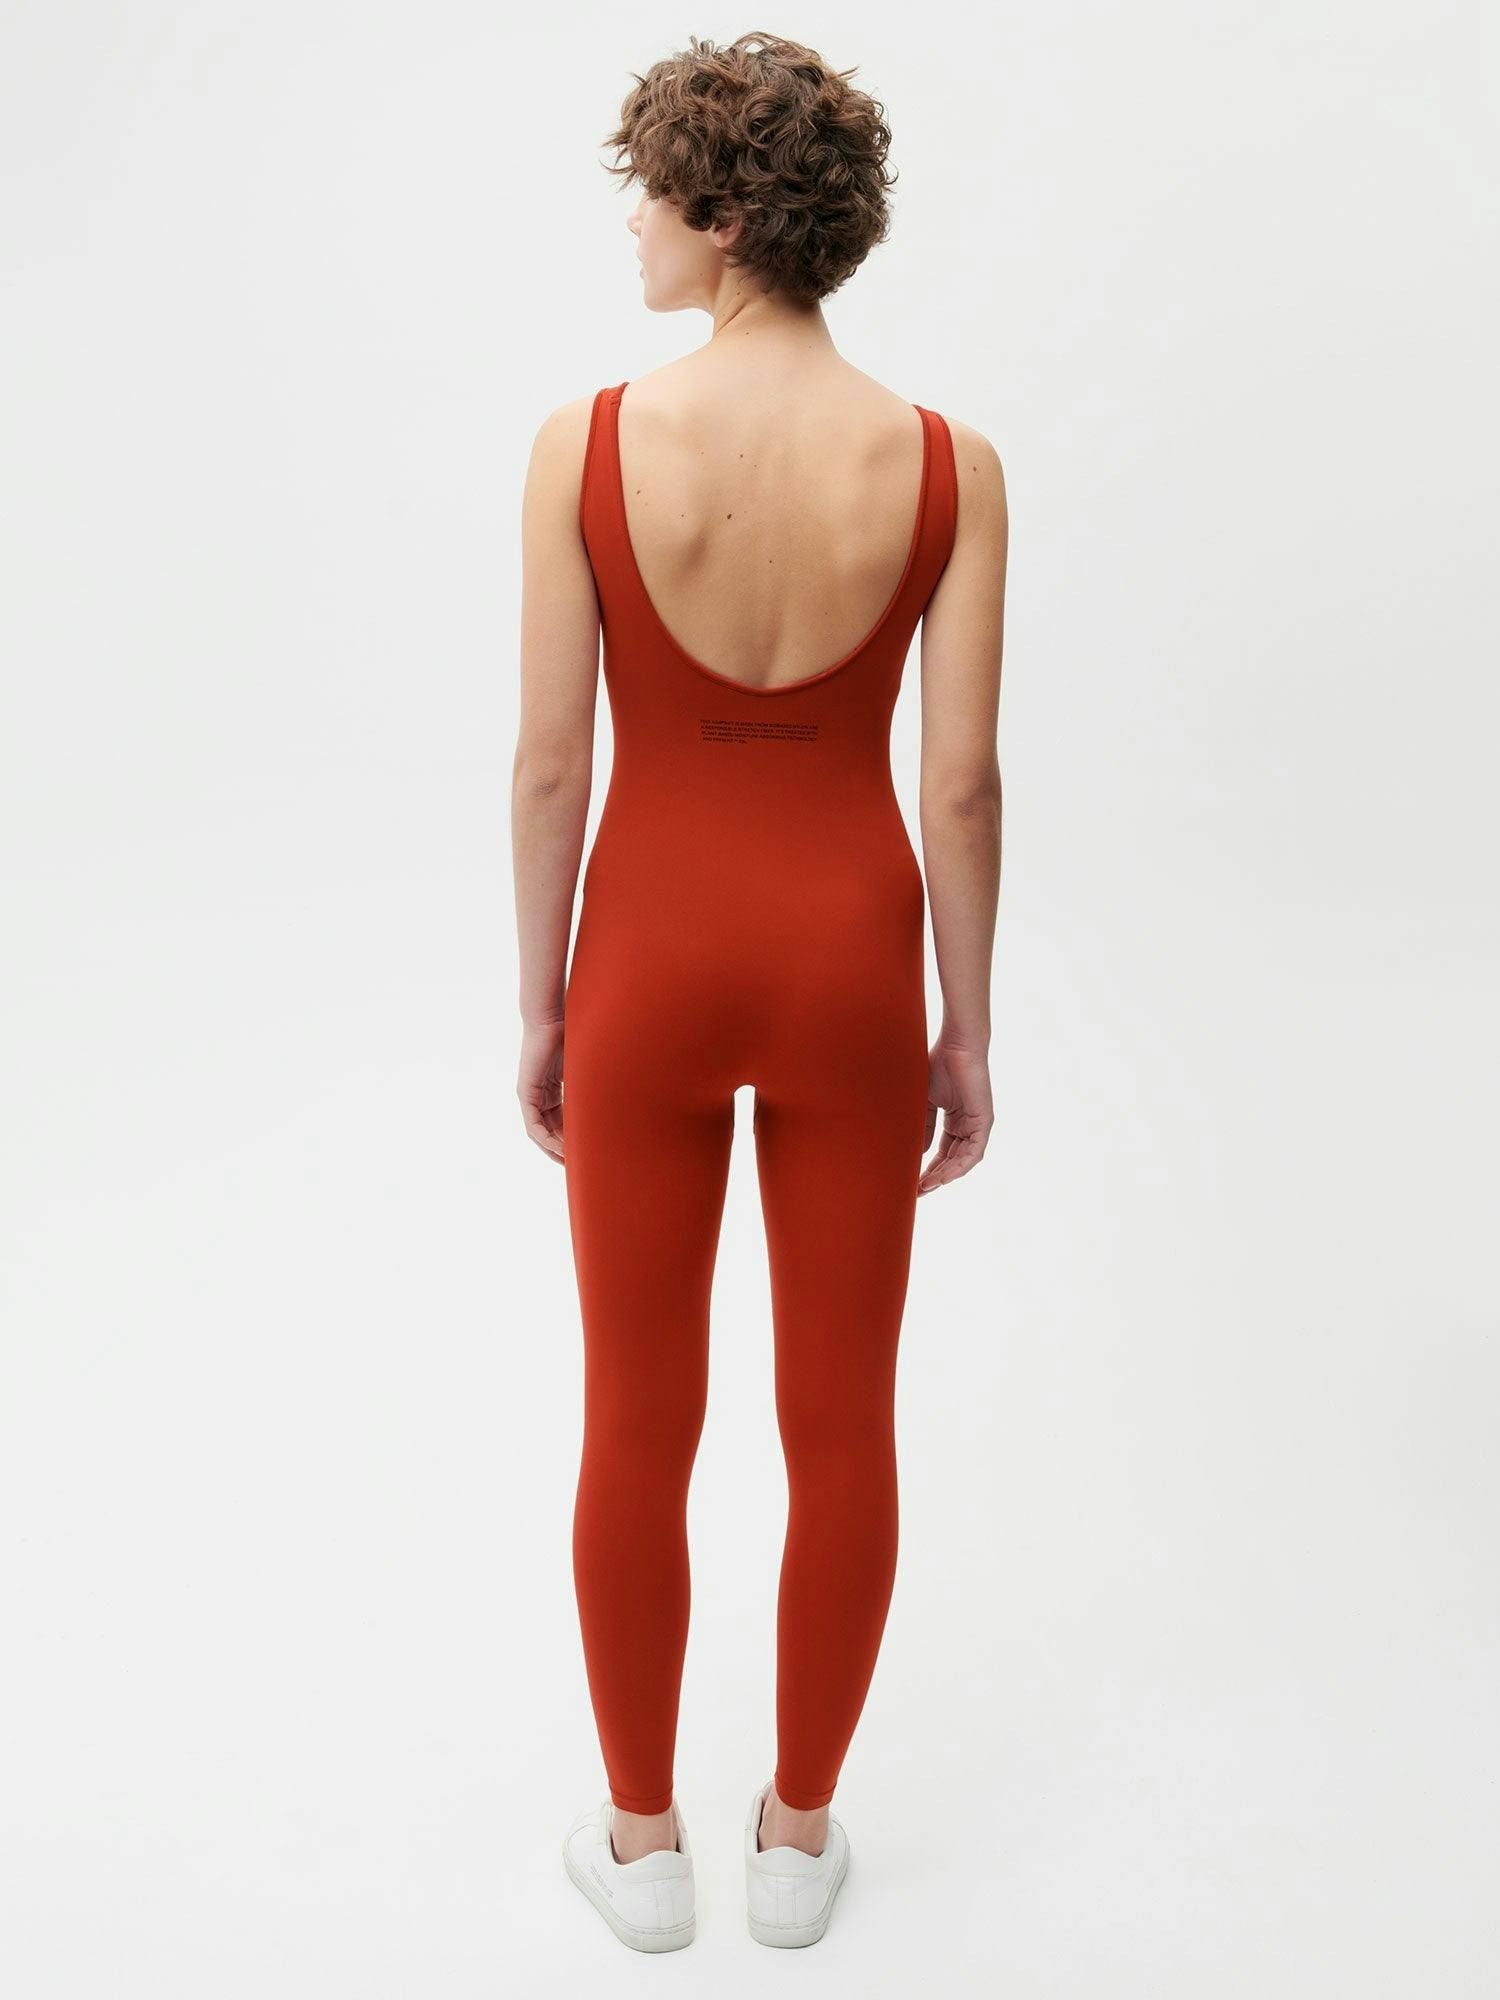 https://cdn.shopify.com/s/files/1/0035/1309/0115/products/Activewear-Womens-Jumpsuit-Jasper-Red-Female-2_12741c70-1ac6-495d-8531-49cdee47a7f8.jpg?v=1662476186